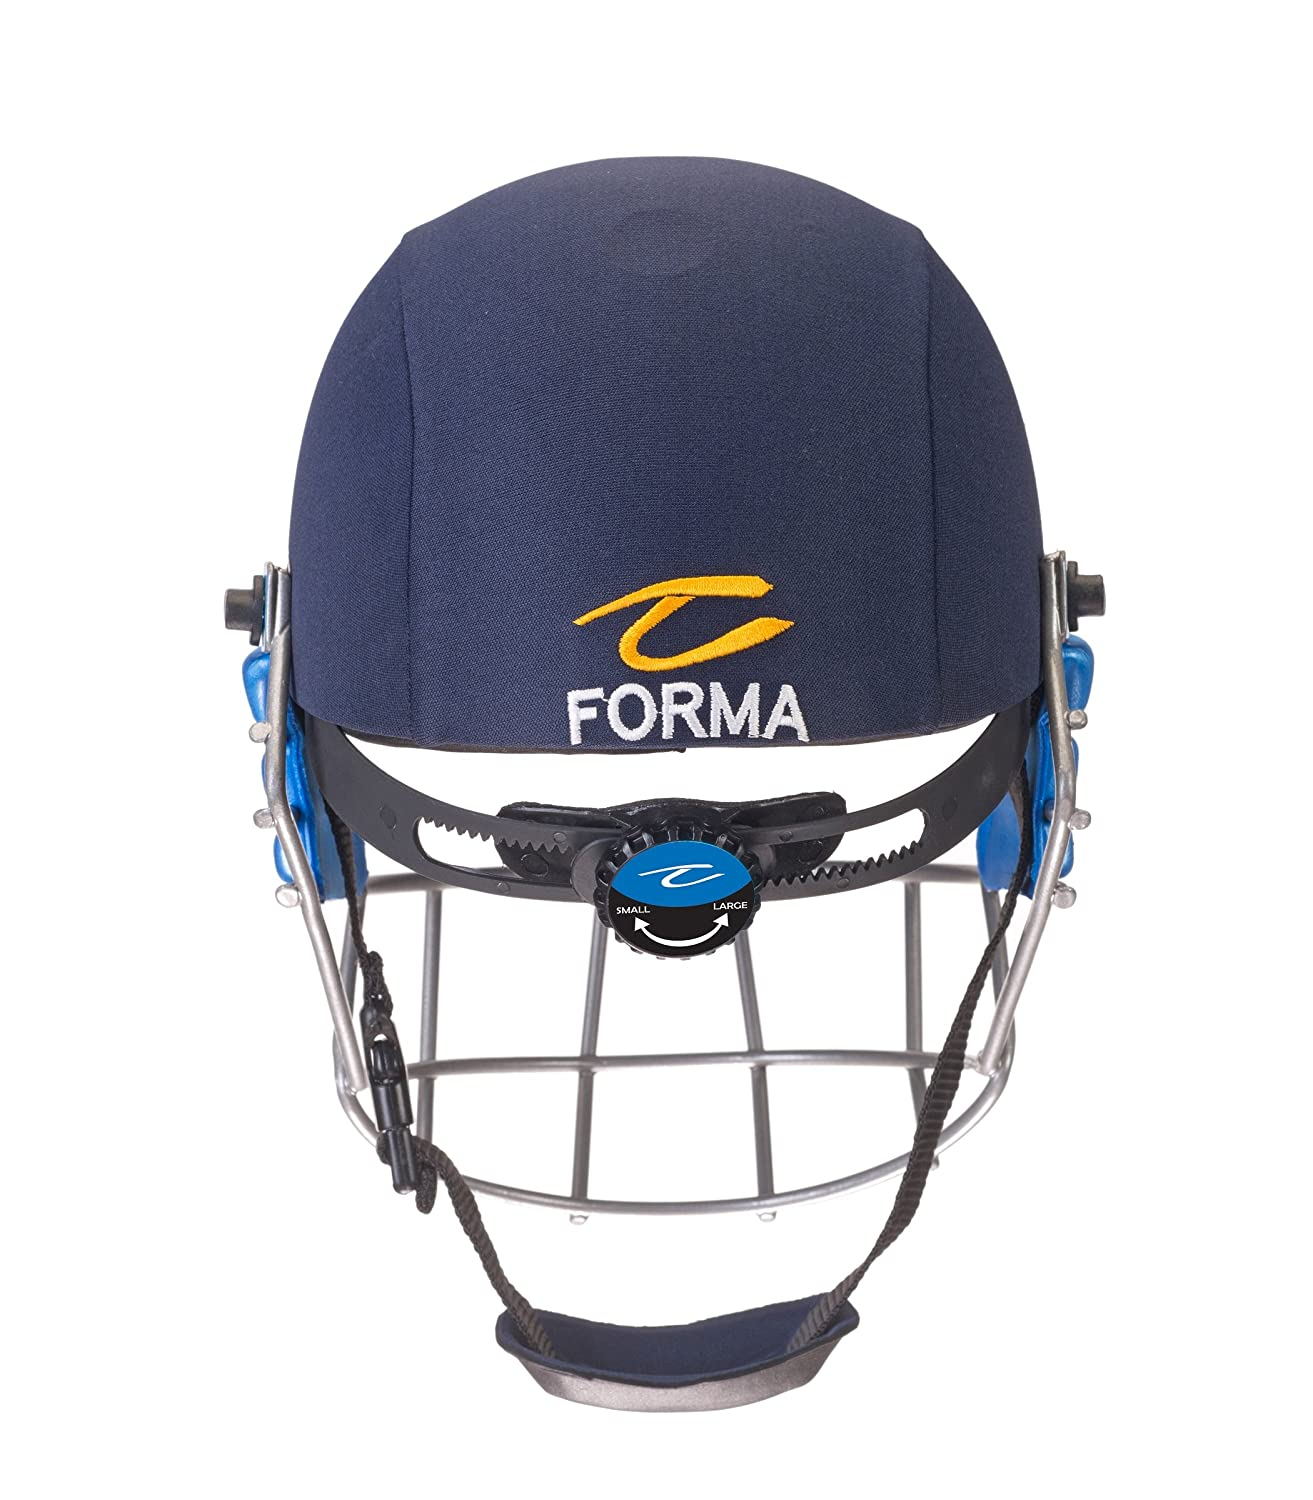 Forma Elite Pro Plus Adult Cricket Helmet with Titanium Grill